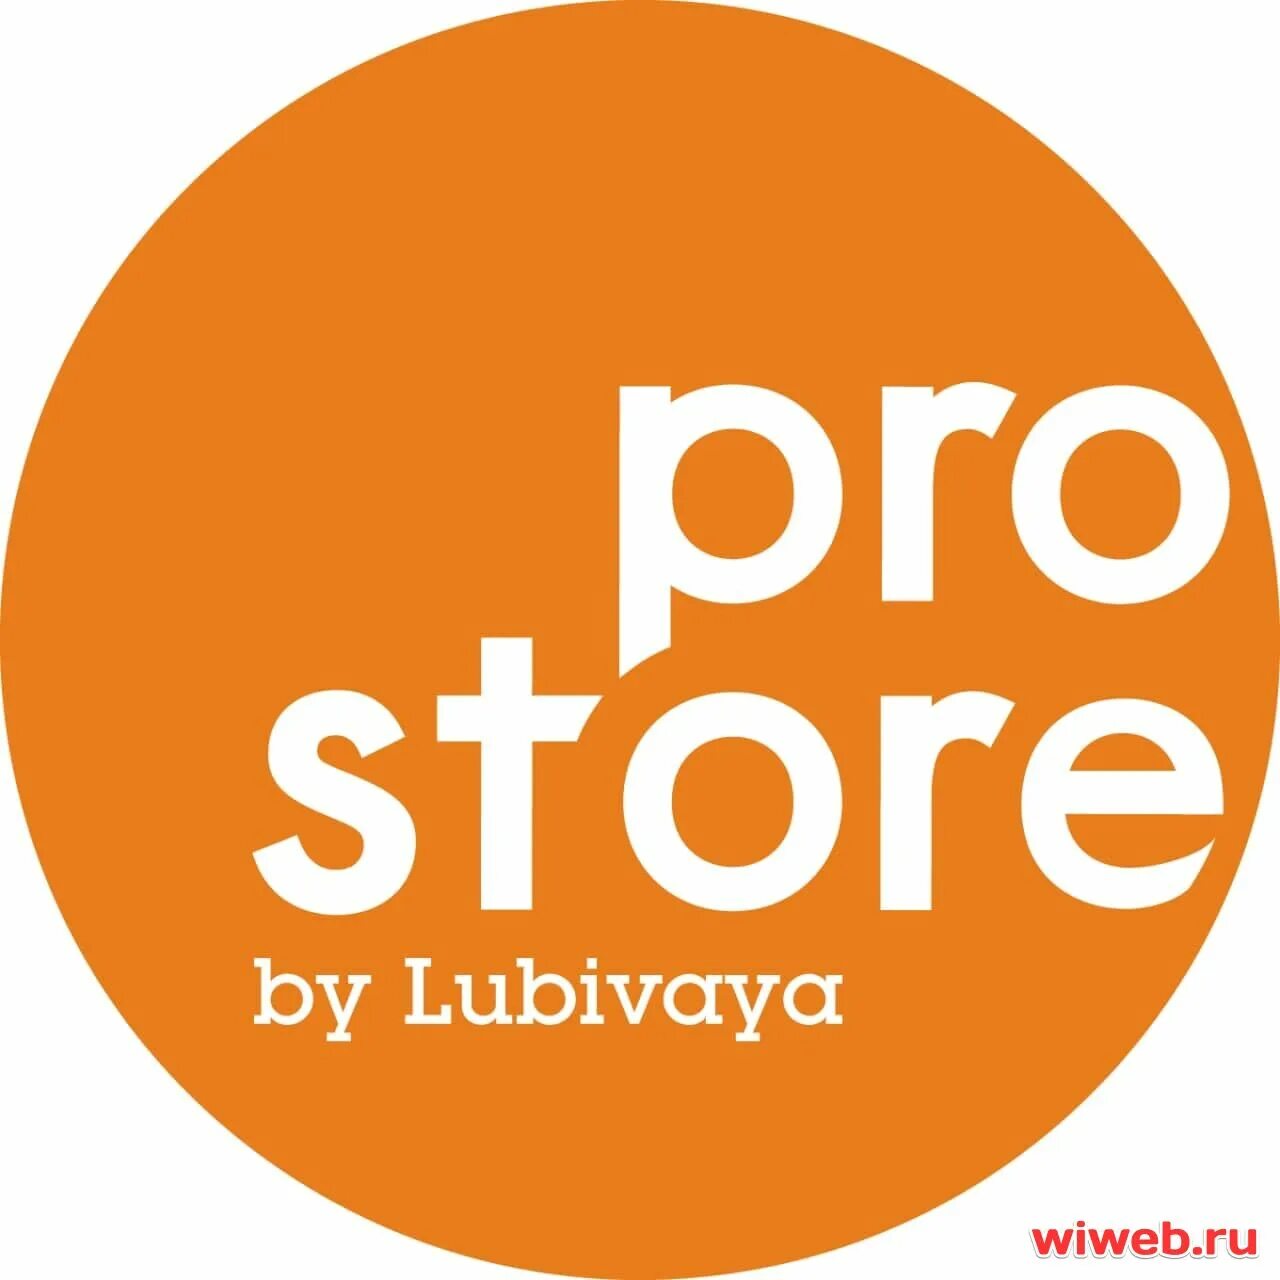 Https pro store. Prostore логотип. Prostore by Lubivaya. Pro Store. ООО простор.